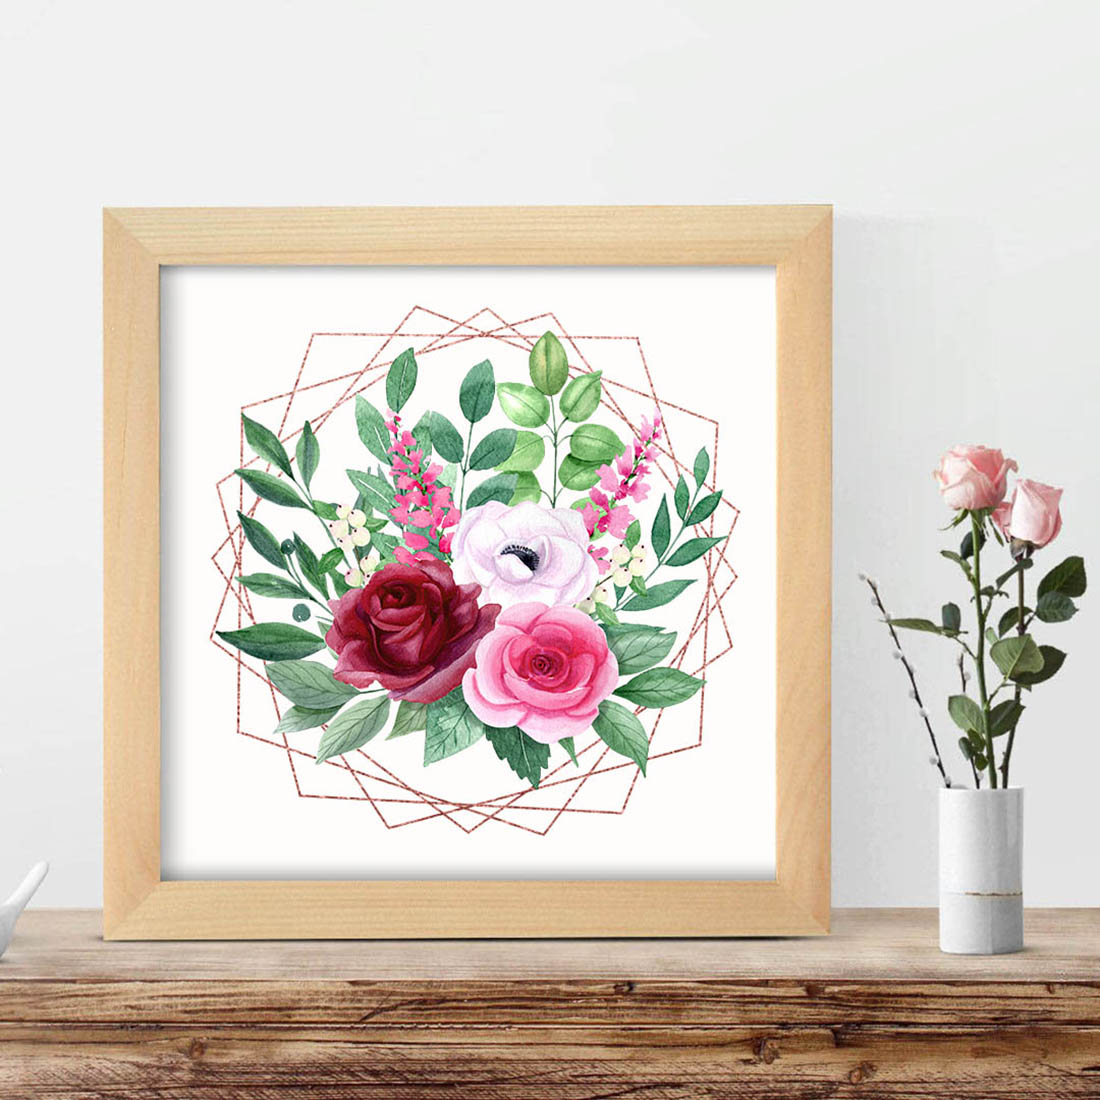 Rose Garden - Set of Watercolor Flowers for interior design.